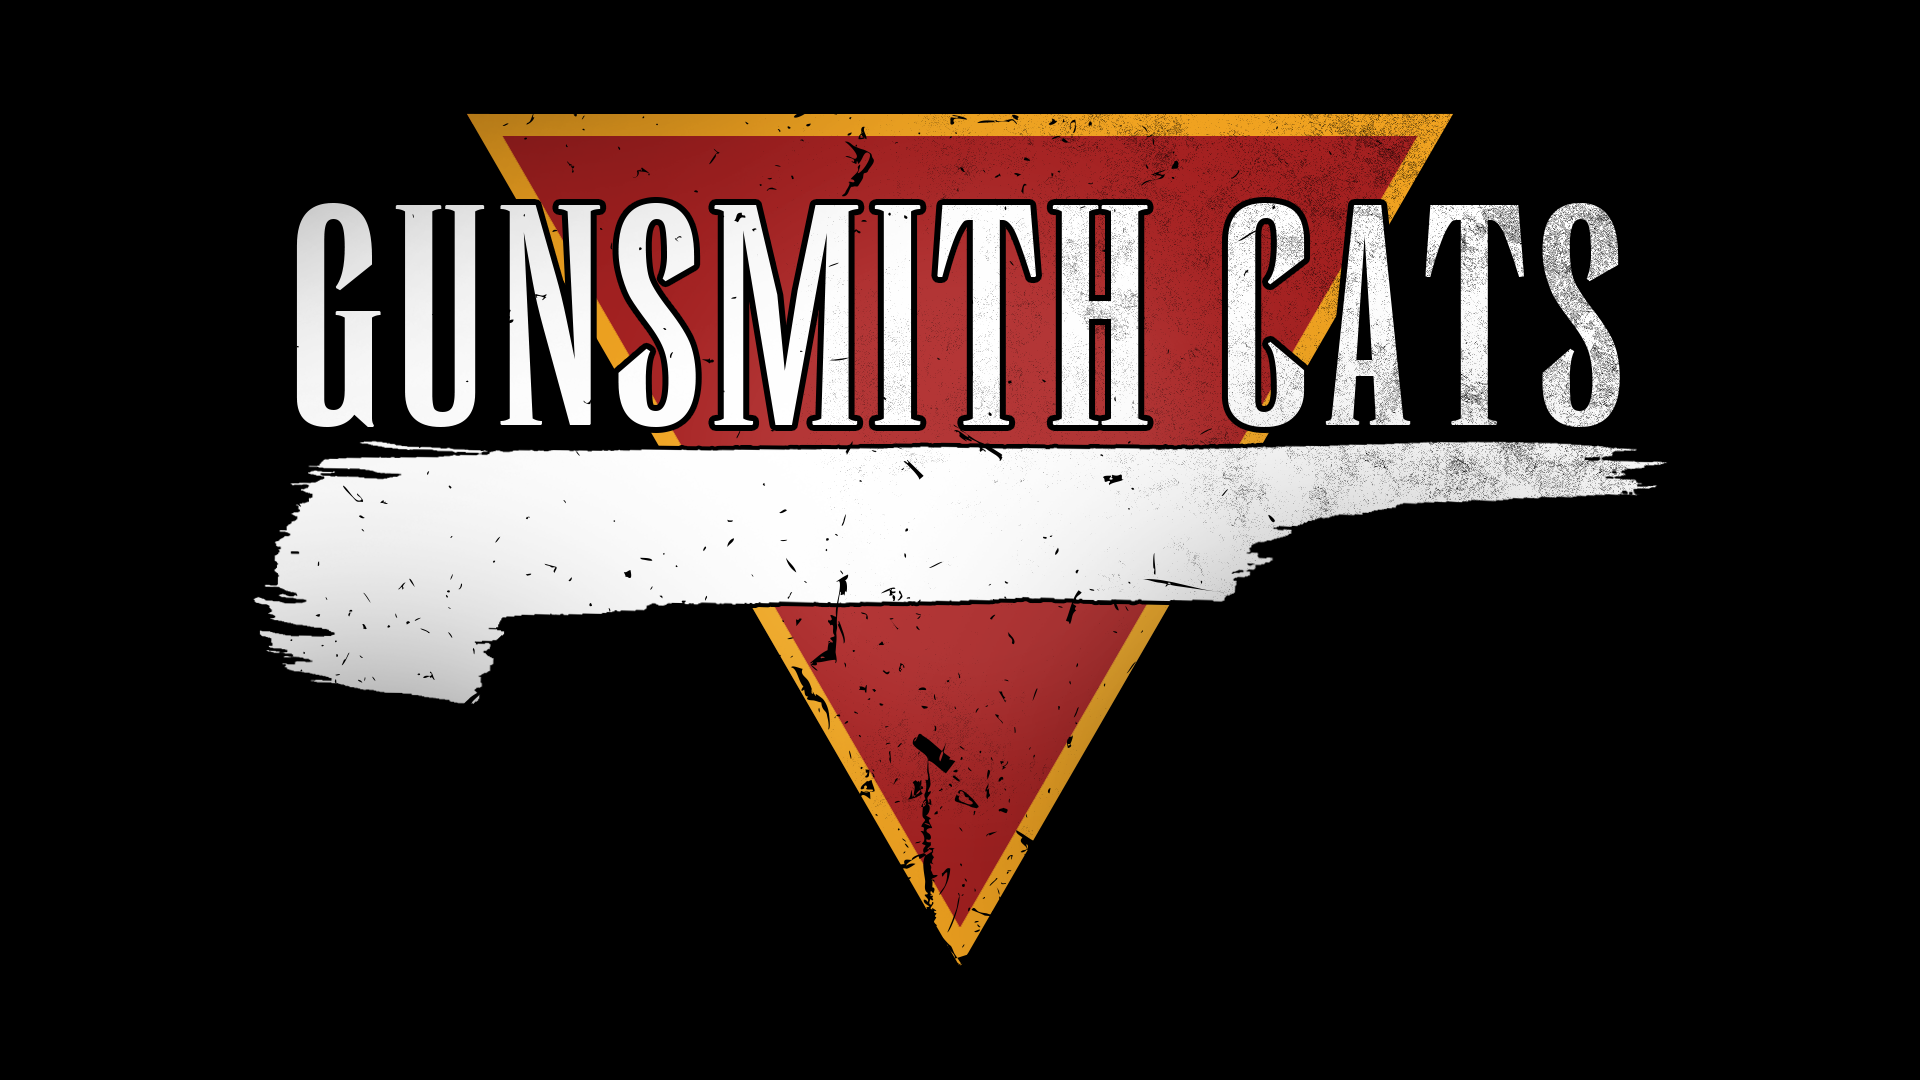 Gunsmith Cats Gunsmith Rally Vincent Anime 1920x1080